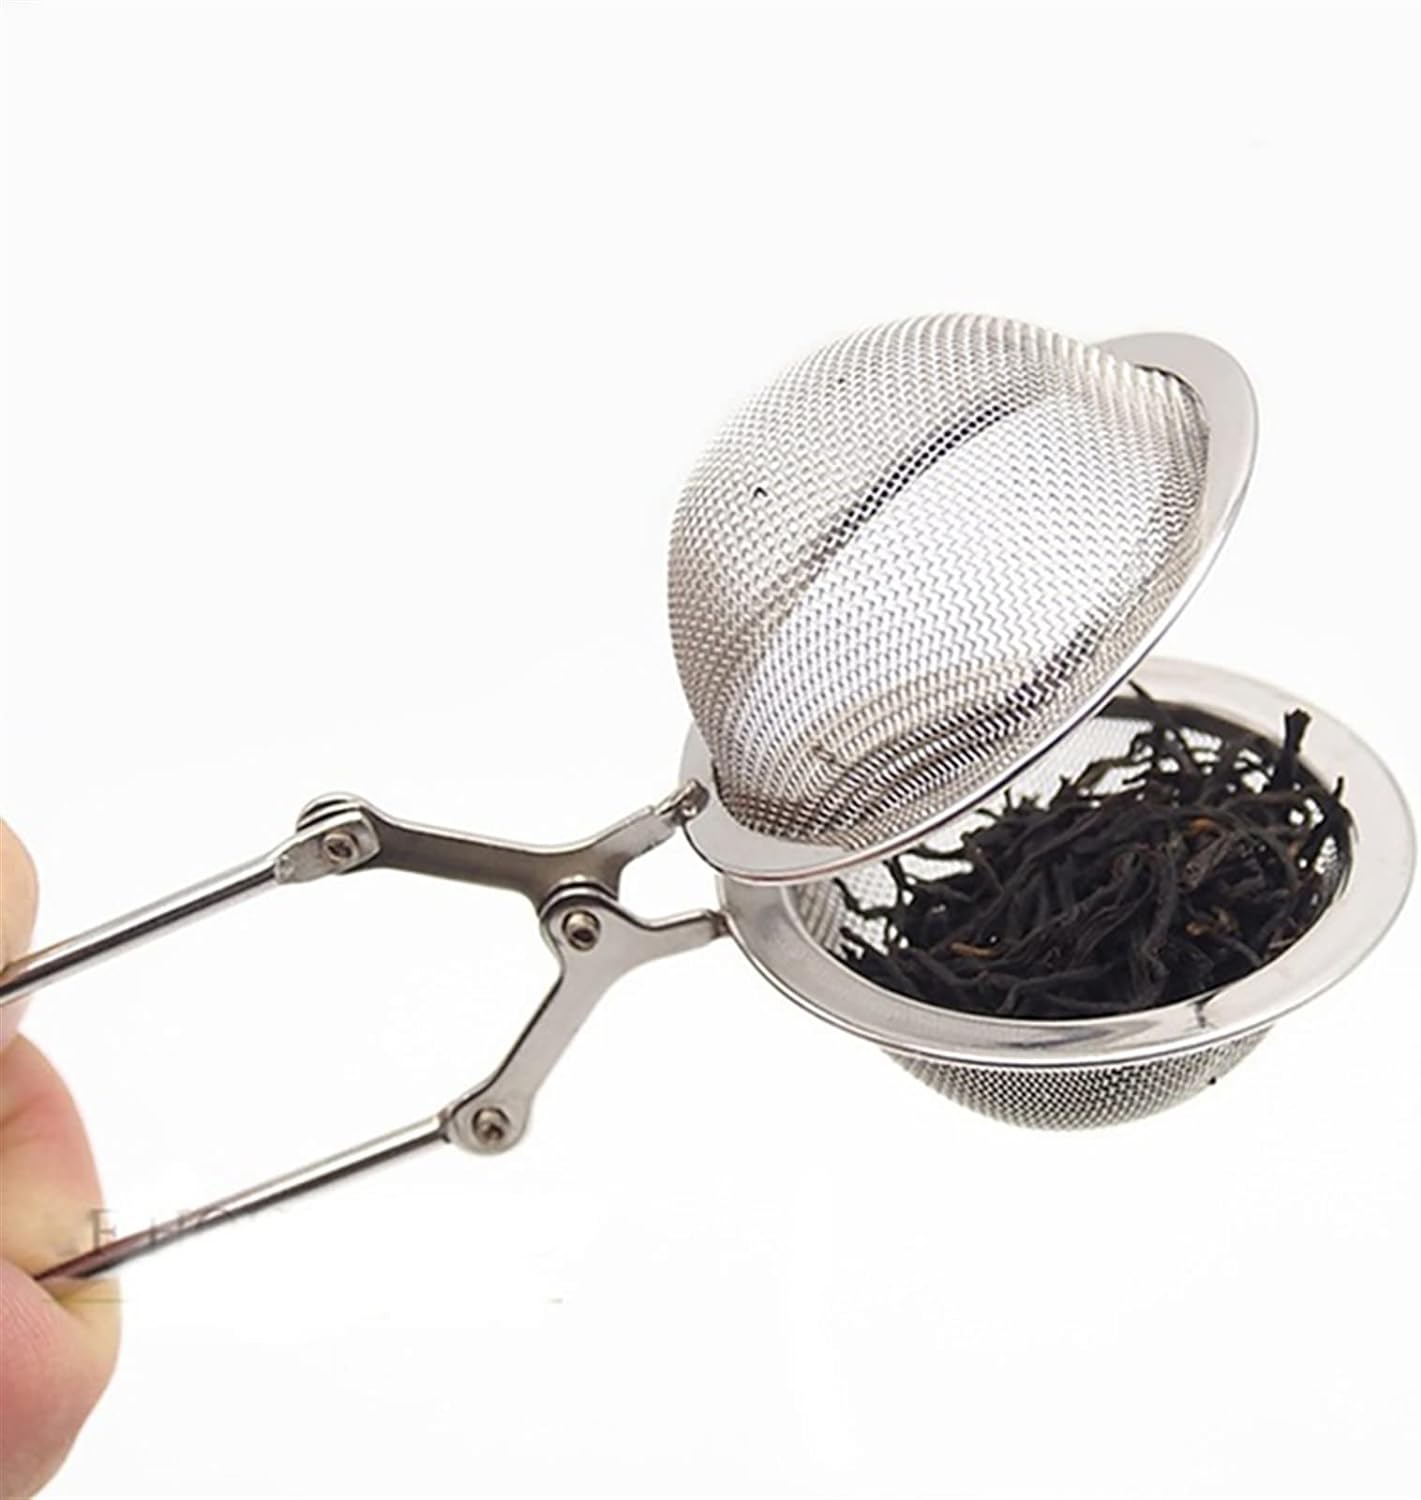 Tea Infuser Stainless Steel Handle Mesh Ball Tea Strainer Tea Infuser Spice Filter